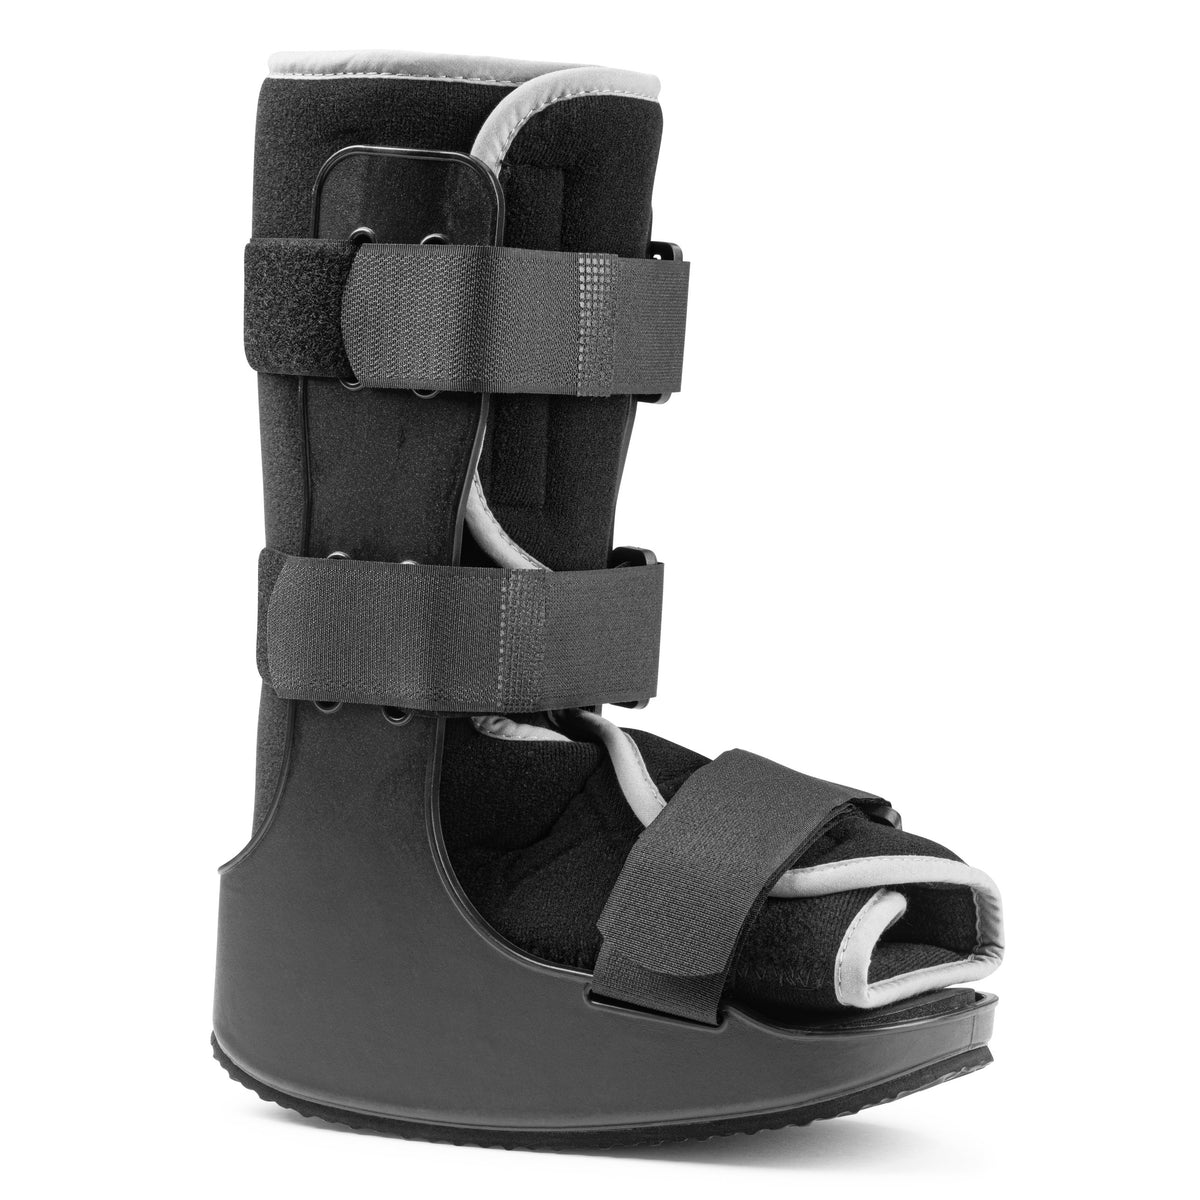 Mars Wellness Premium Pediatric Cam Walker Fracture Ankle Boot